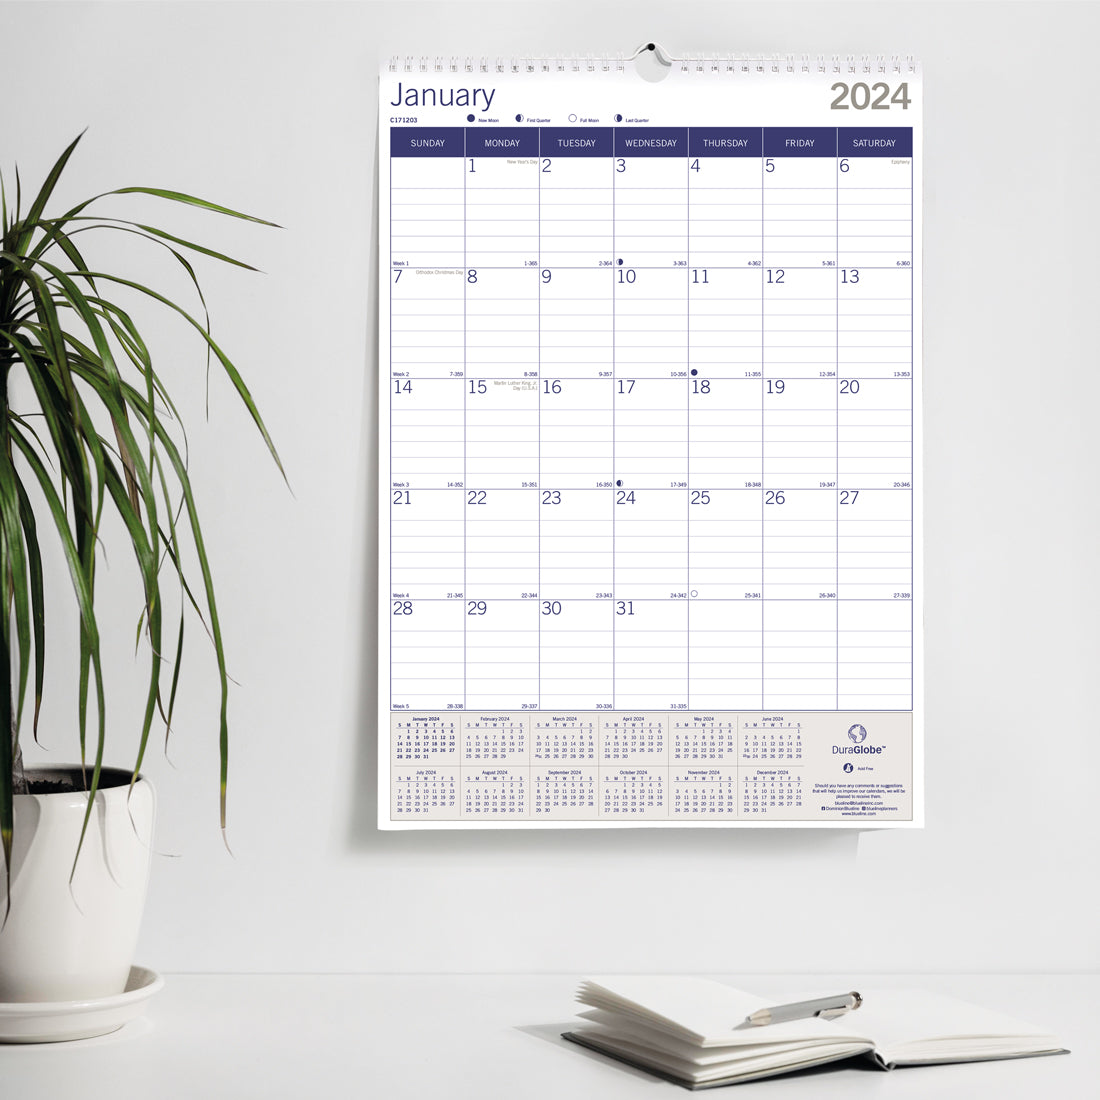 DuraGlobe Monthly Wall Calendar 2024